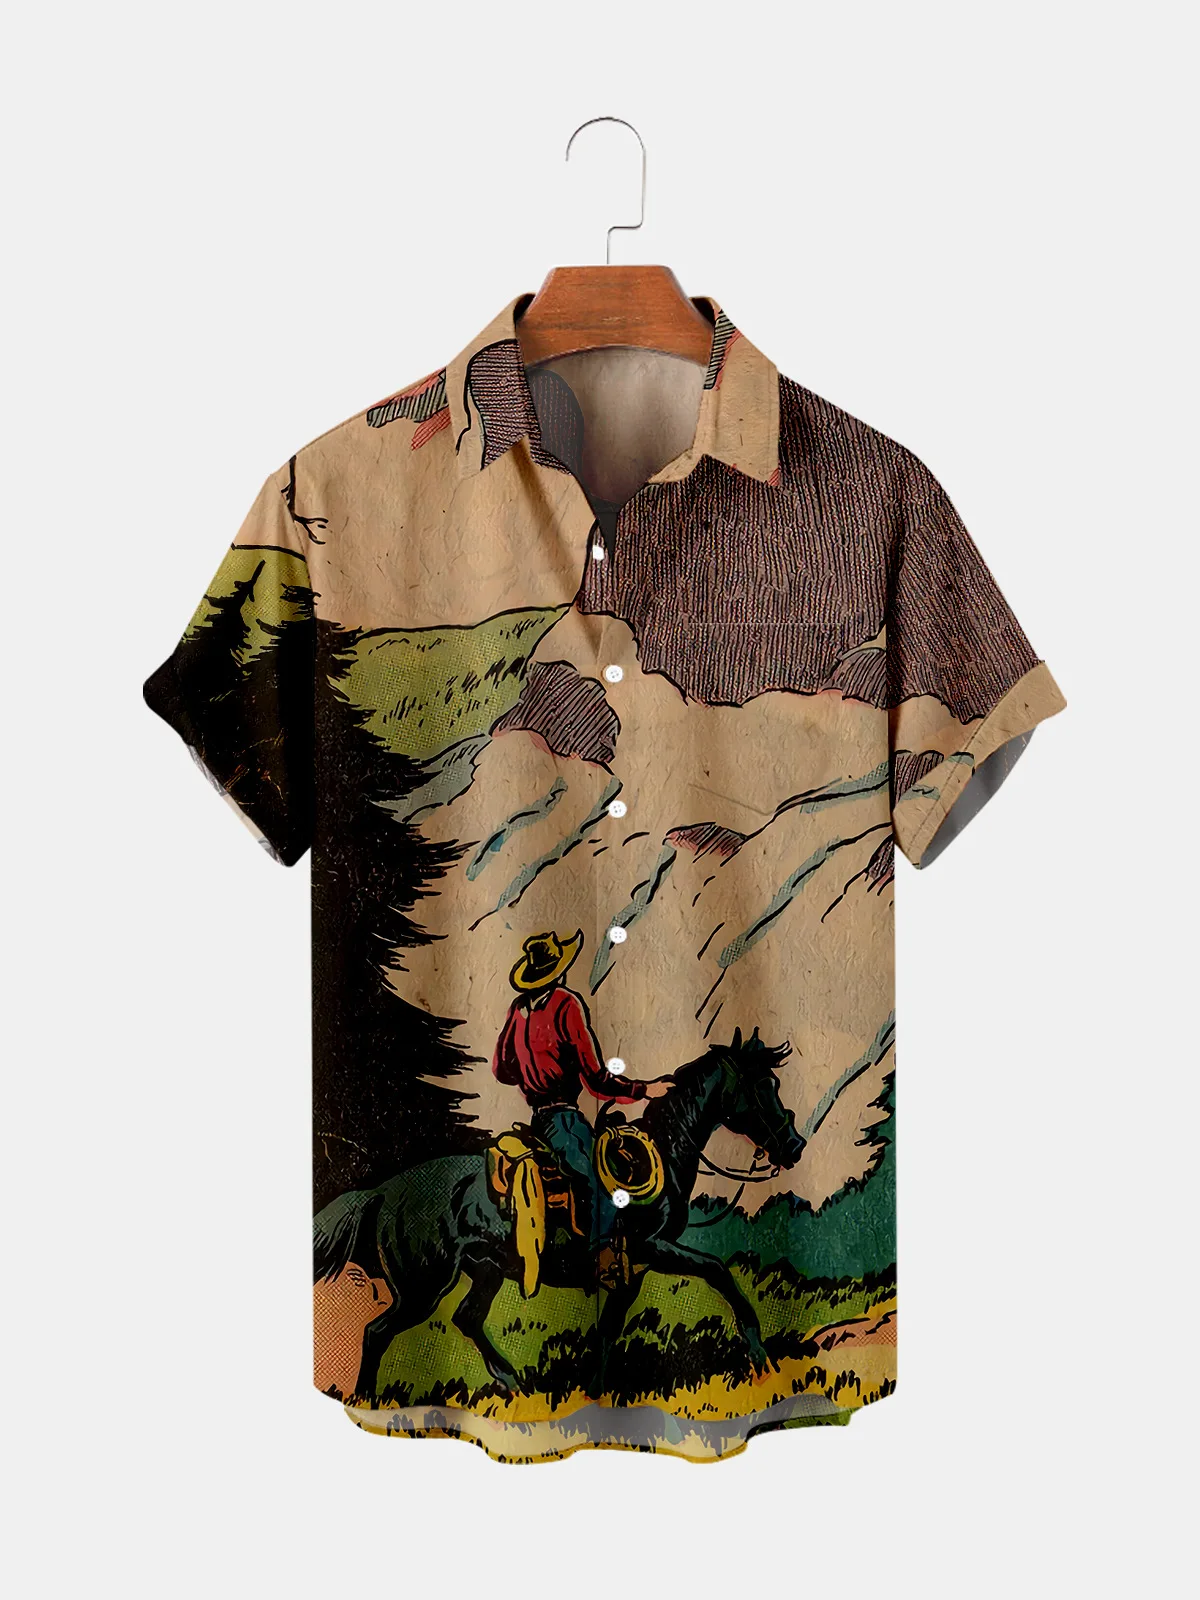 2021 summer Hawaii creative T-shirt men's loose and quick-drying outdoor beach top T-shirt printing design oversized T-shirt men